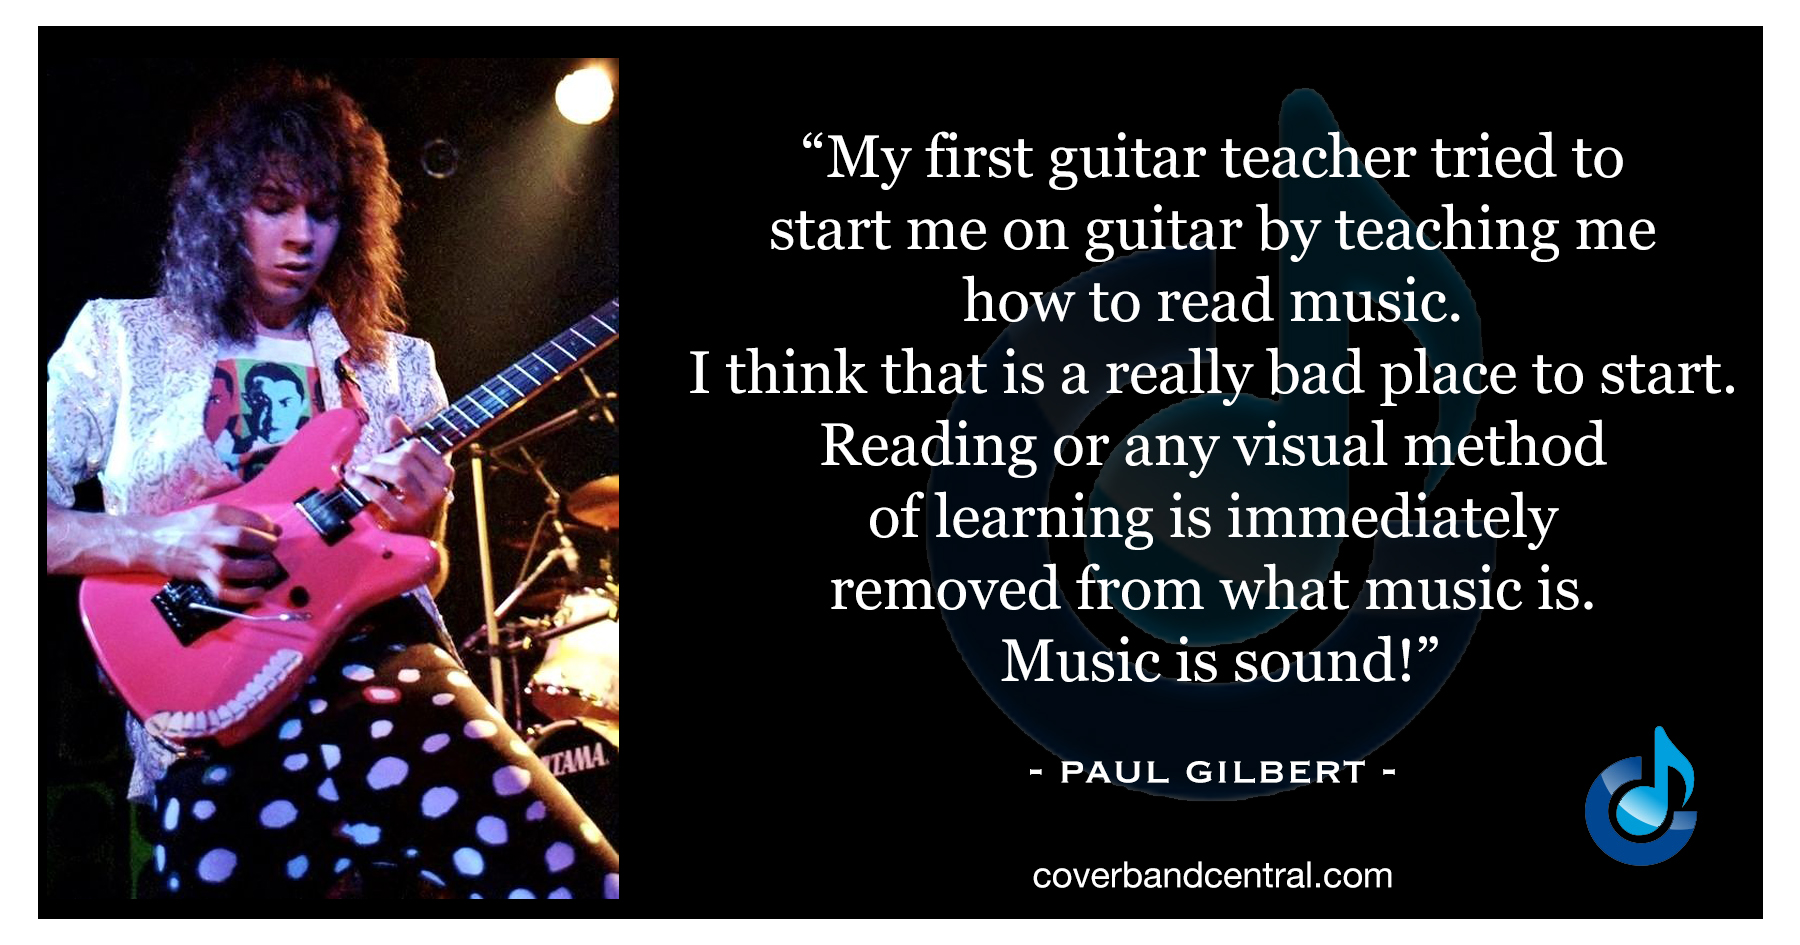 Paul Gilbert quote